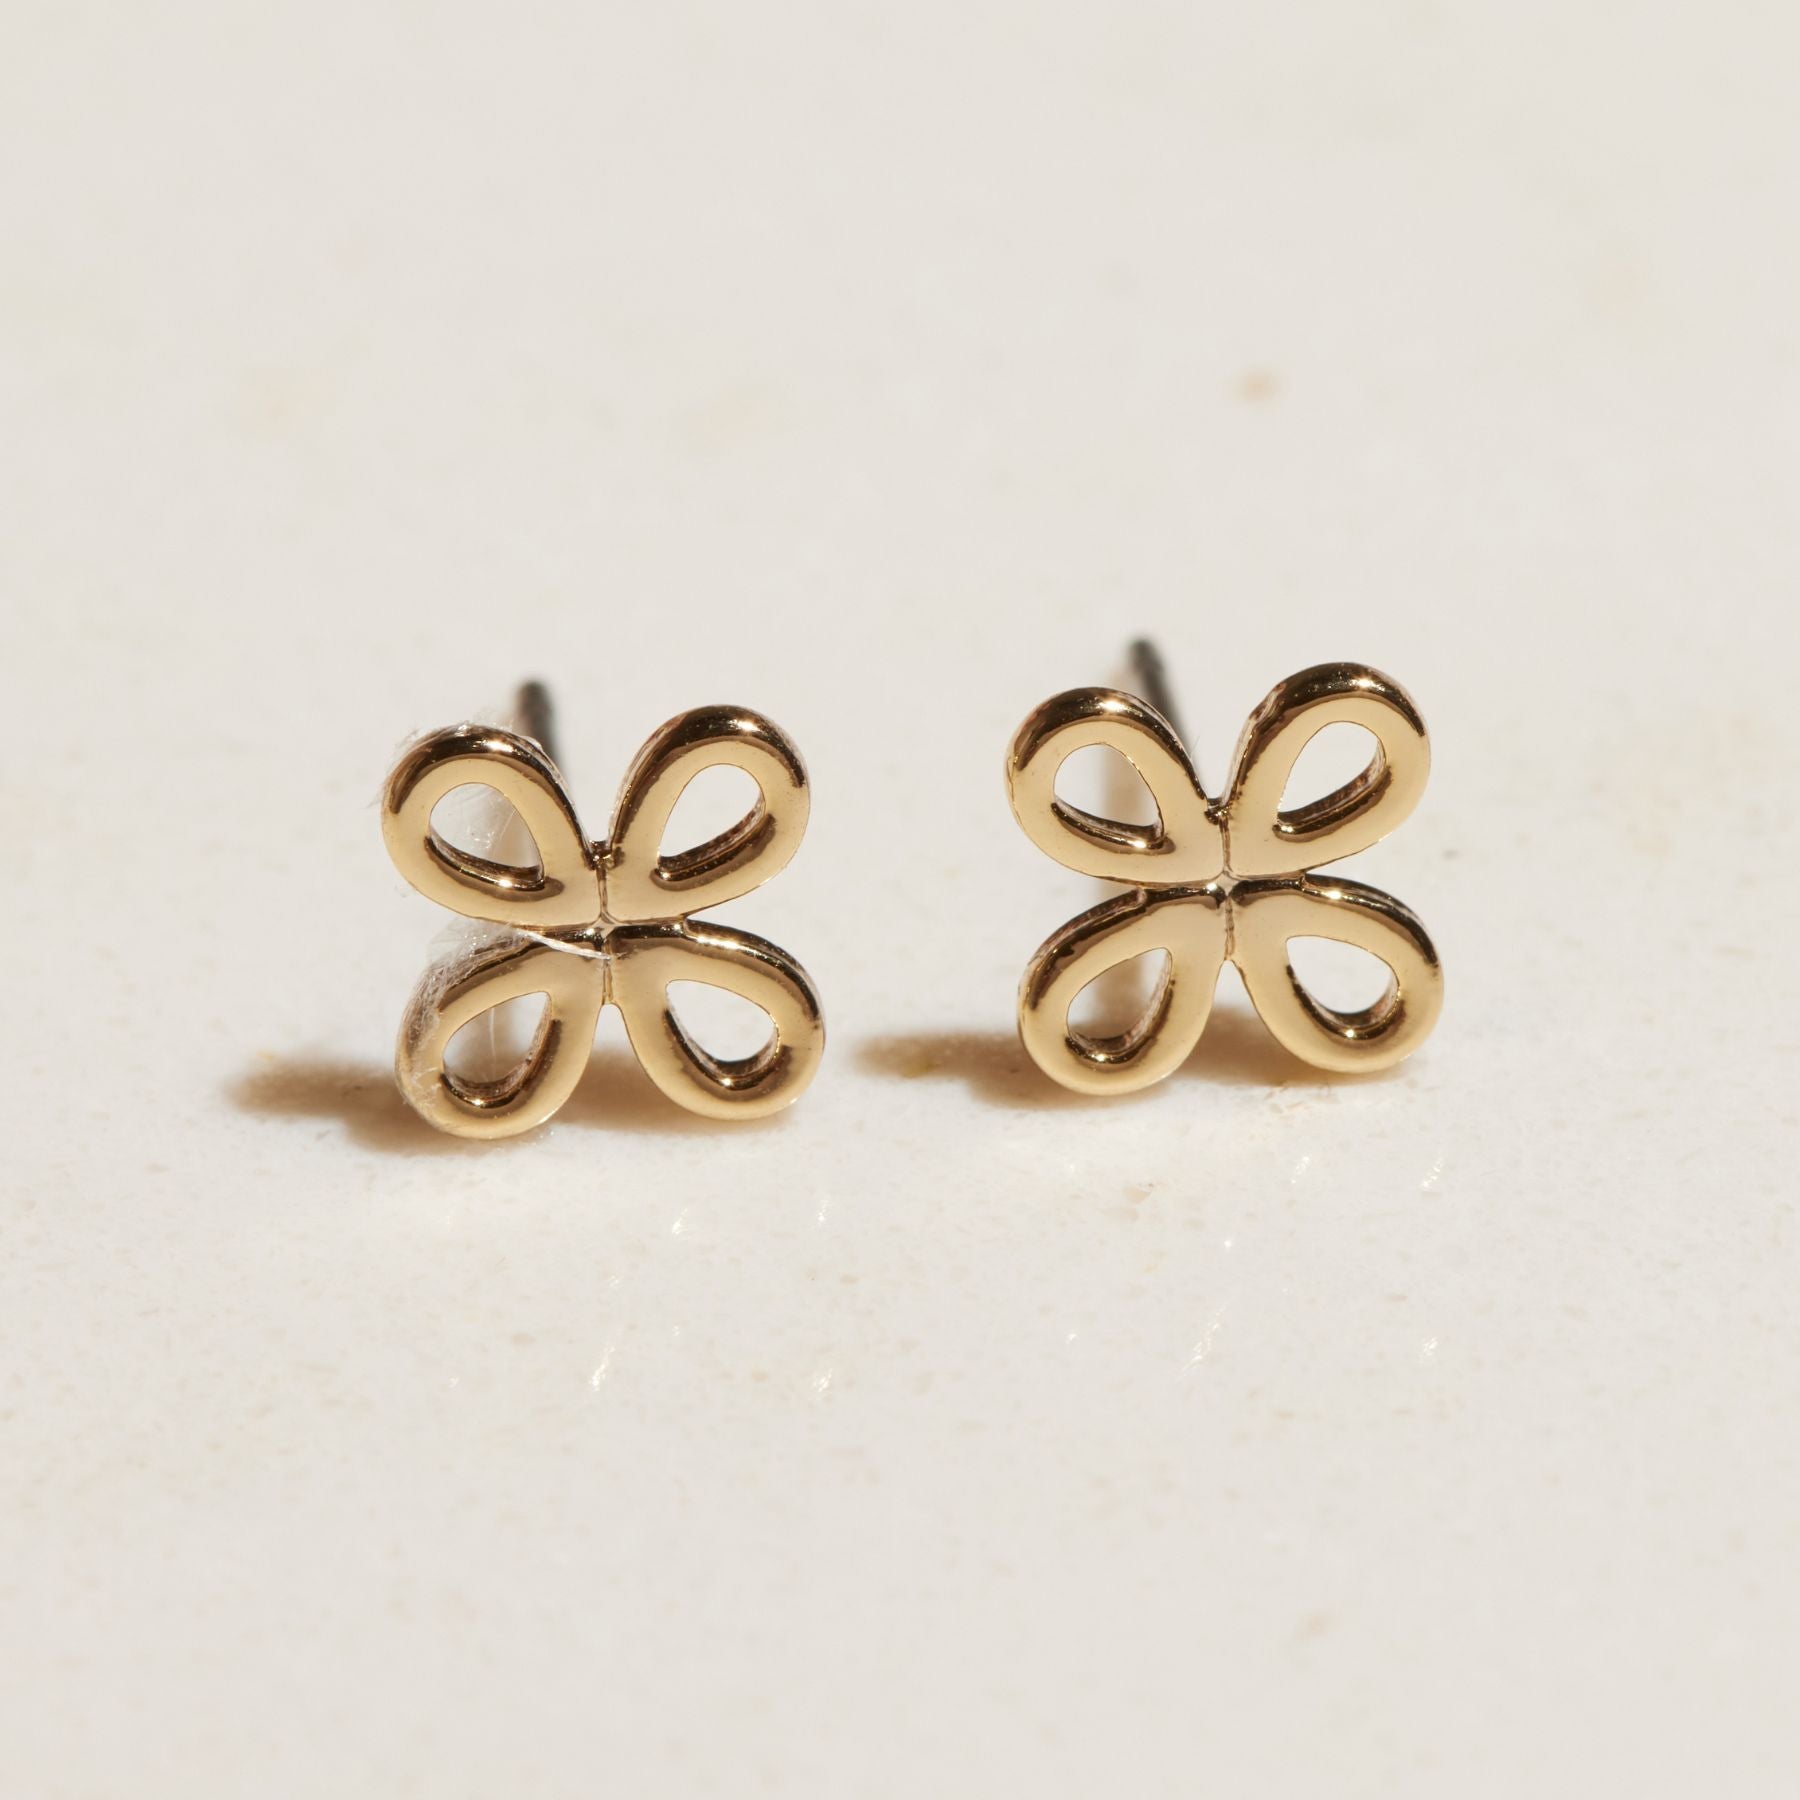 Very Small Earrings Mini Leaf Ear Piercing Studs For Women Kids Girls Gold  Color Stainless Steel Earrings 12 Pair Lot For Resale - Stud Earrings -  AliExpress